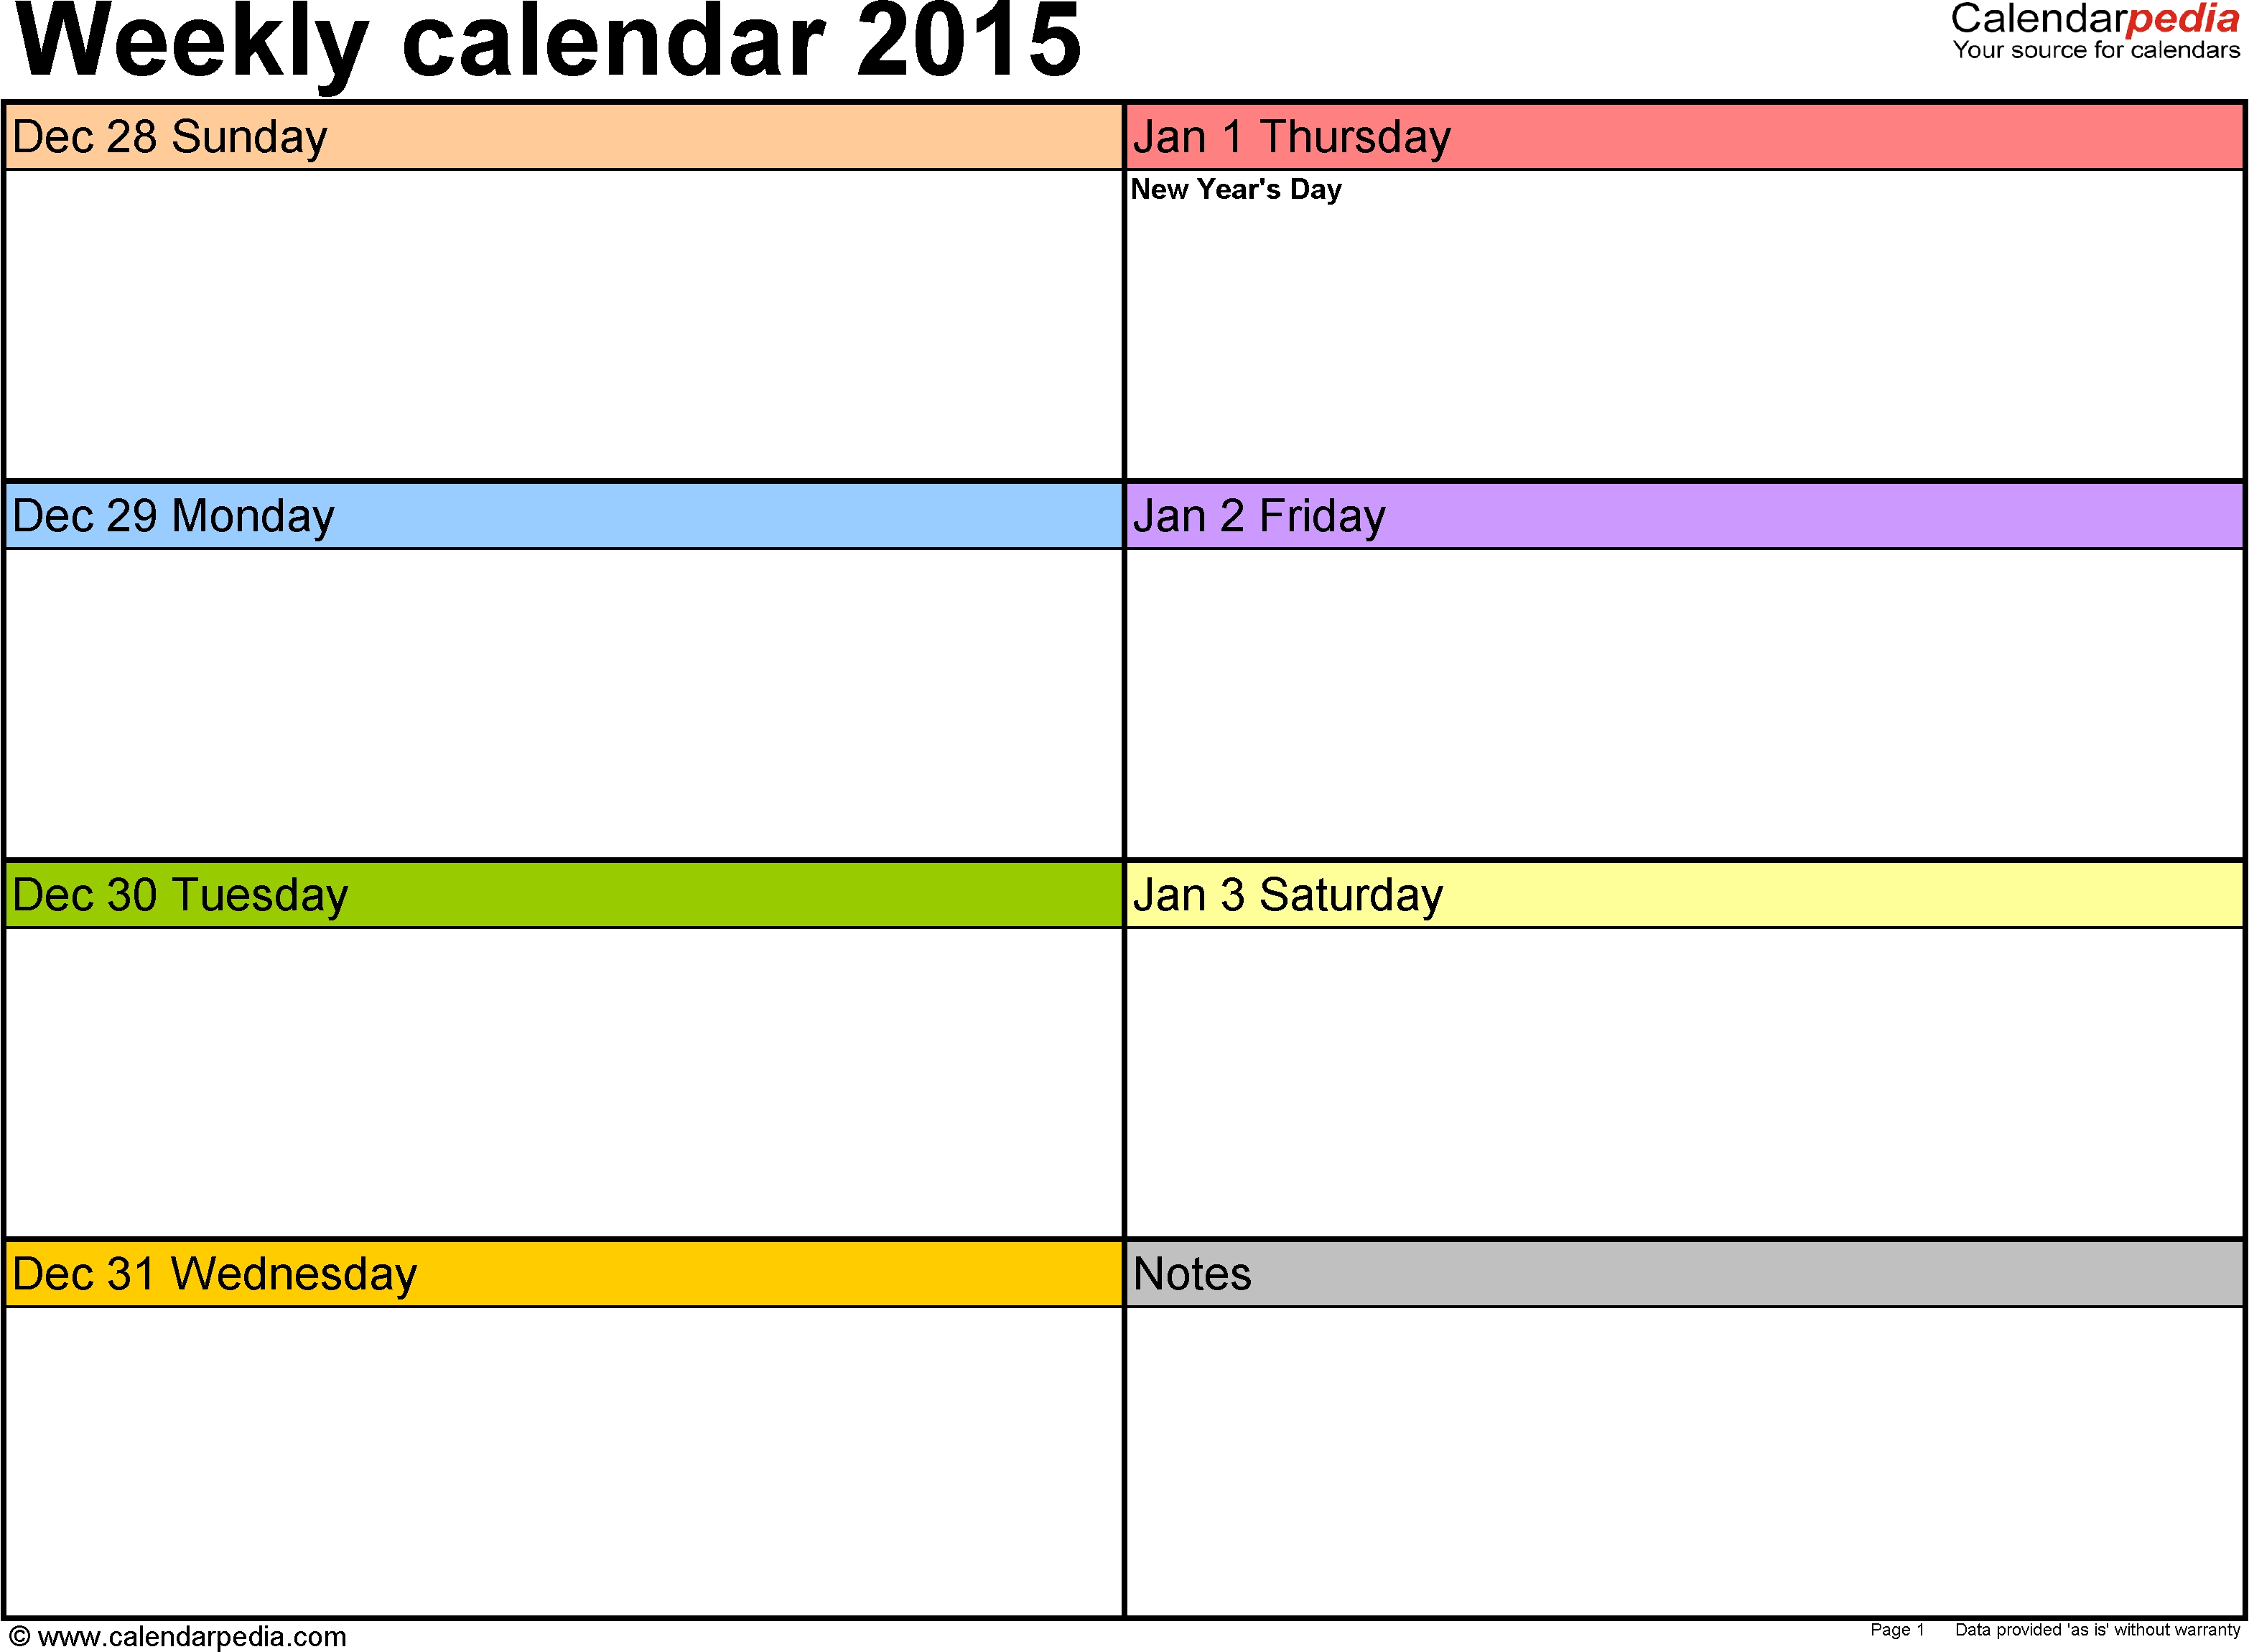 Weekly Calendar 2015 For Excel - 12 Free Printable Templates for Printable Weekly Calendar With Top 5 For Week